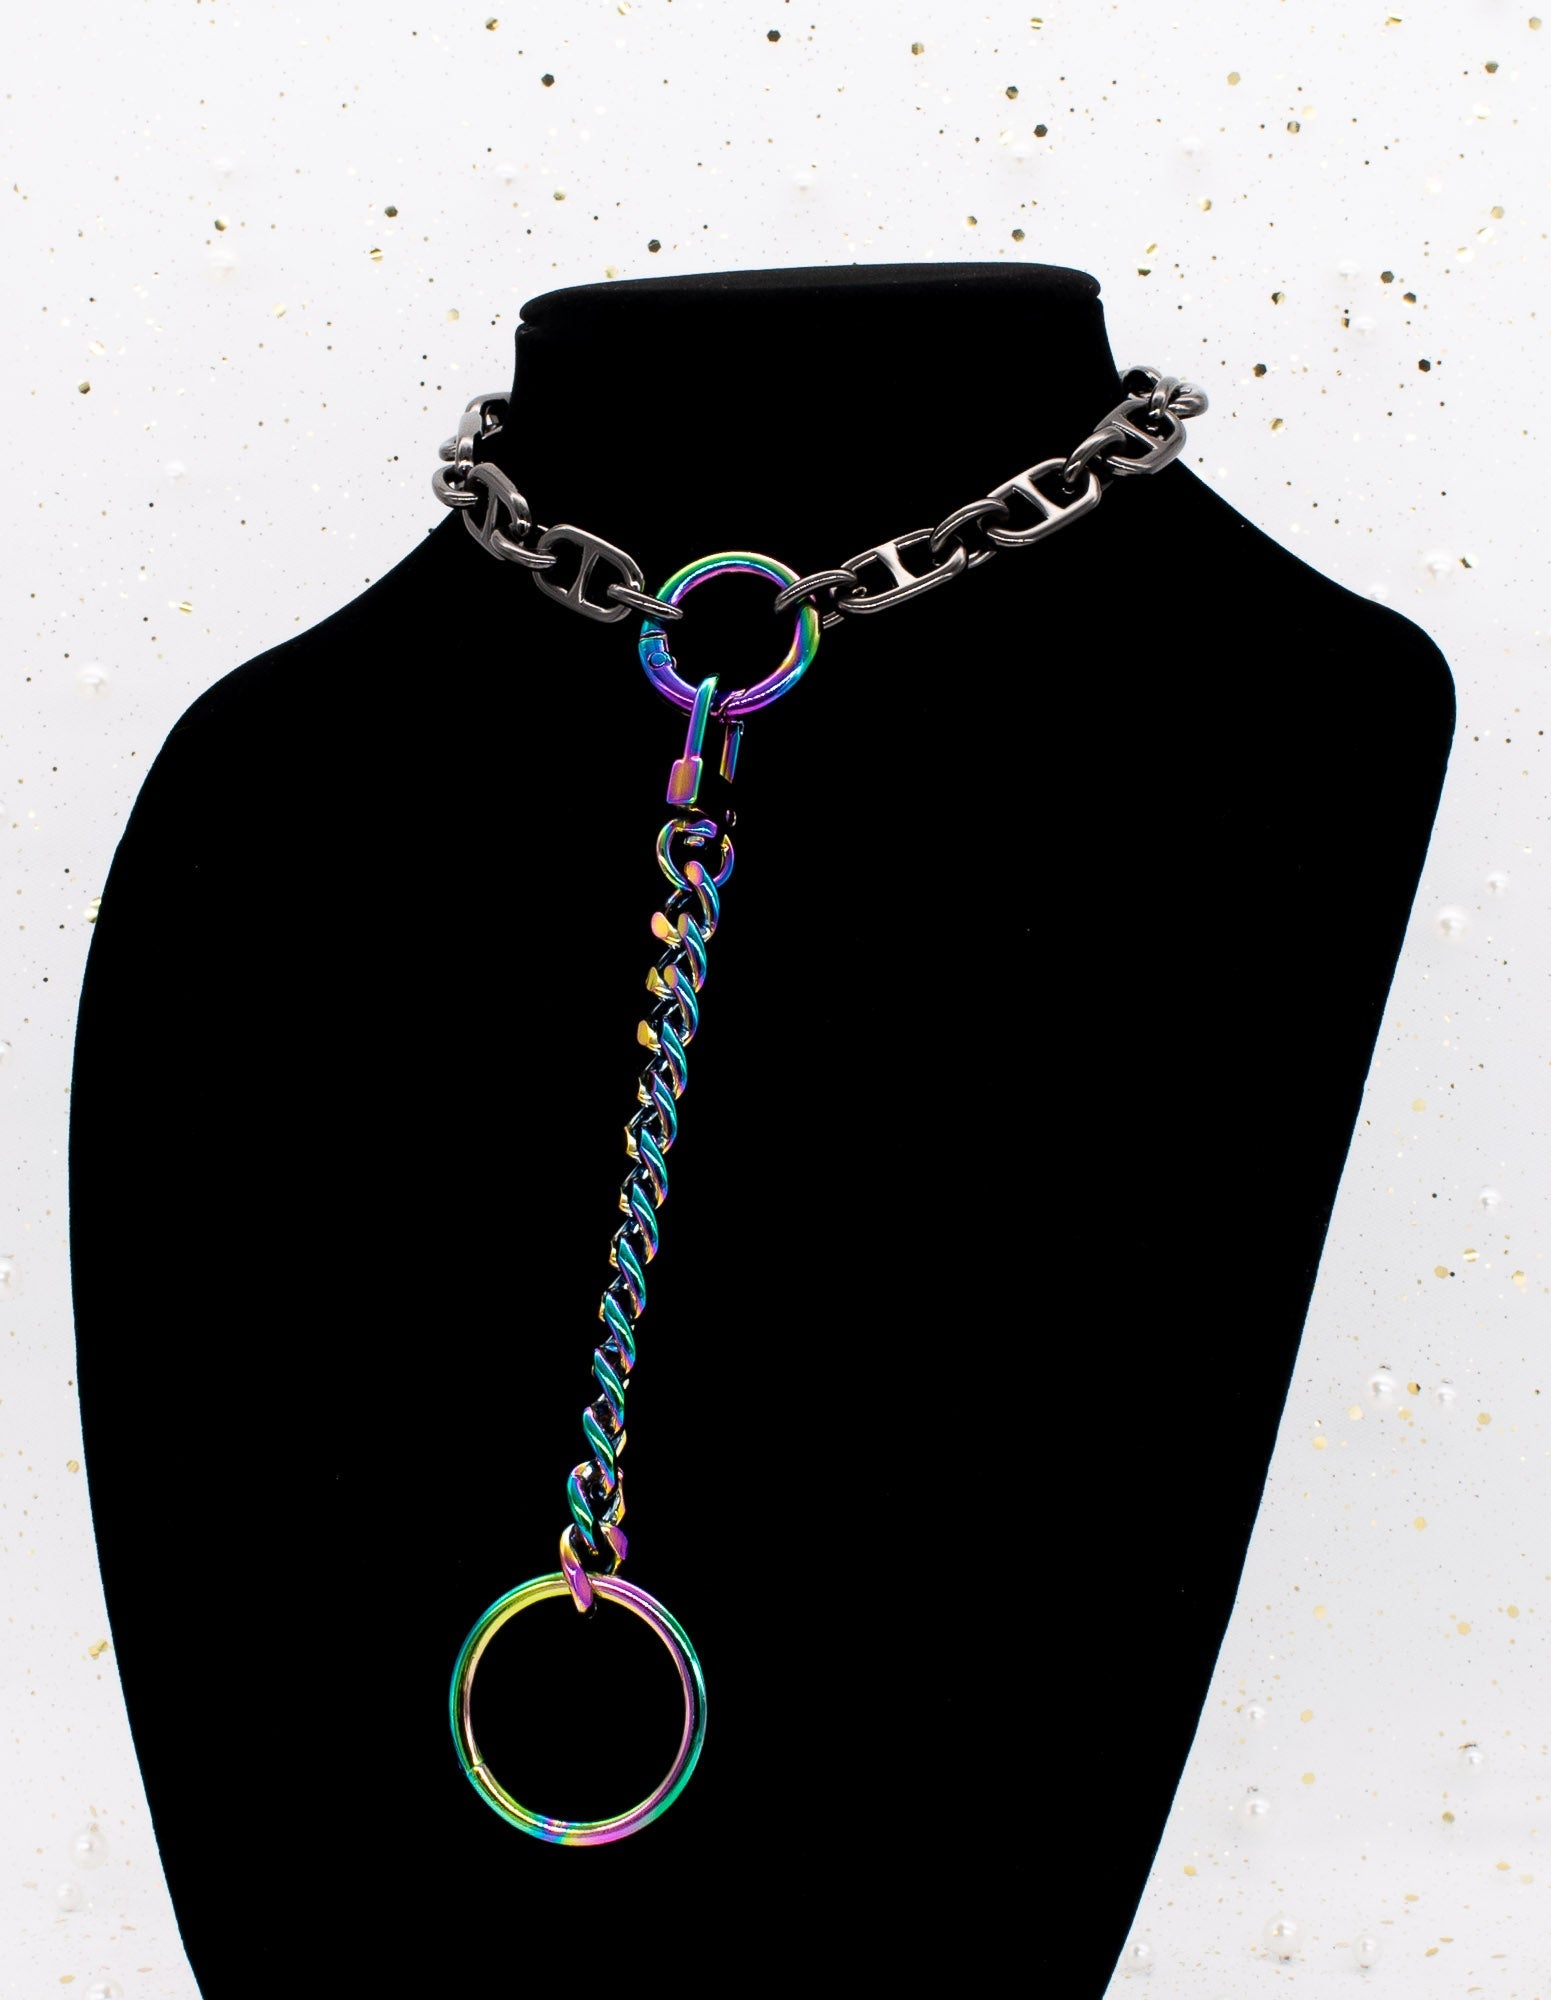 Chunky Chain Collar and Leash in Gunmetal & Rainbow